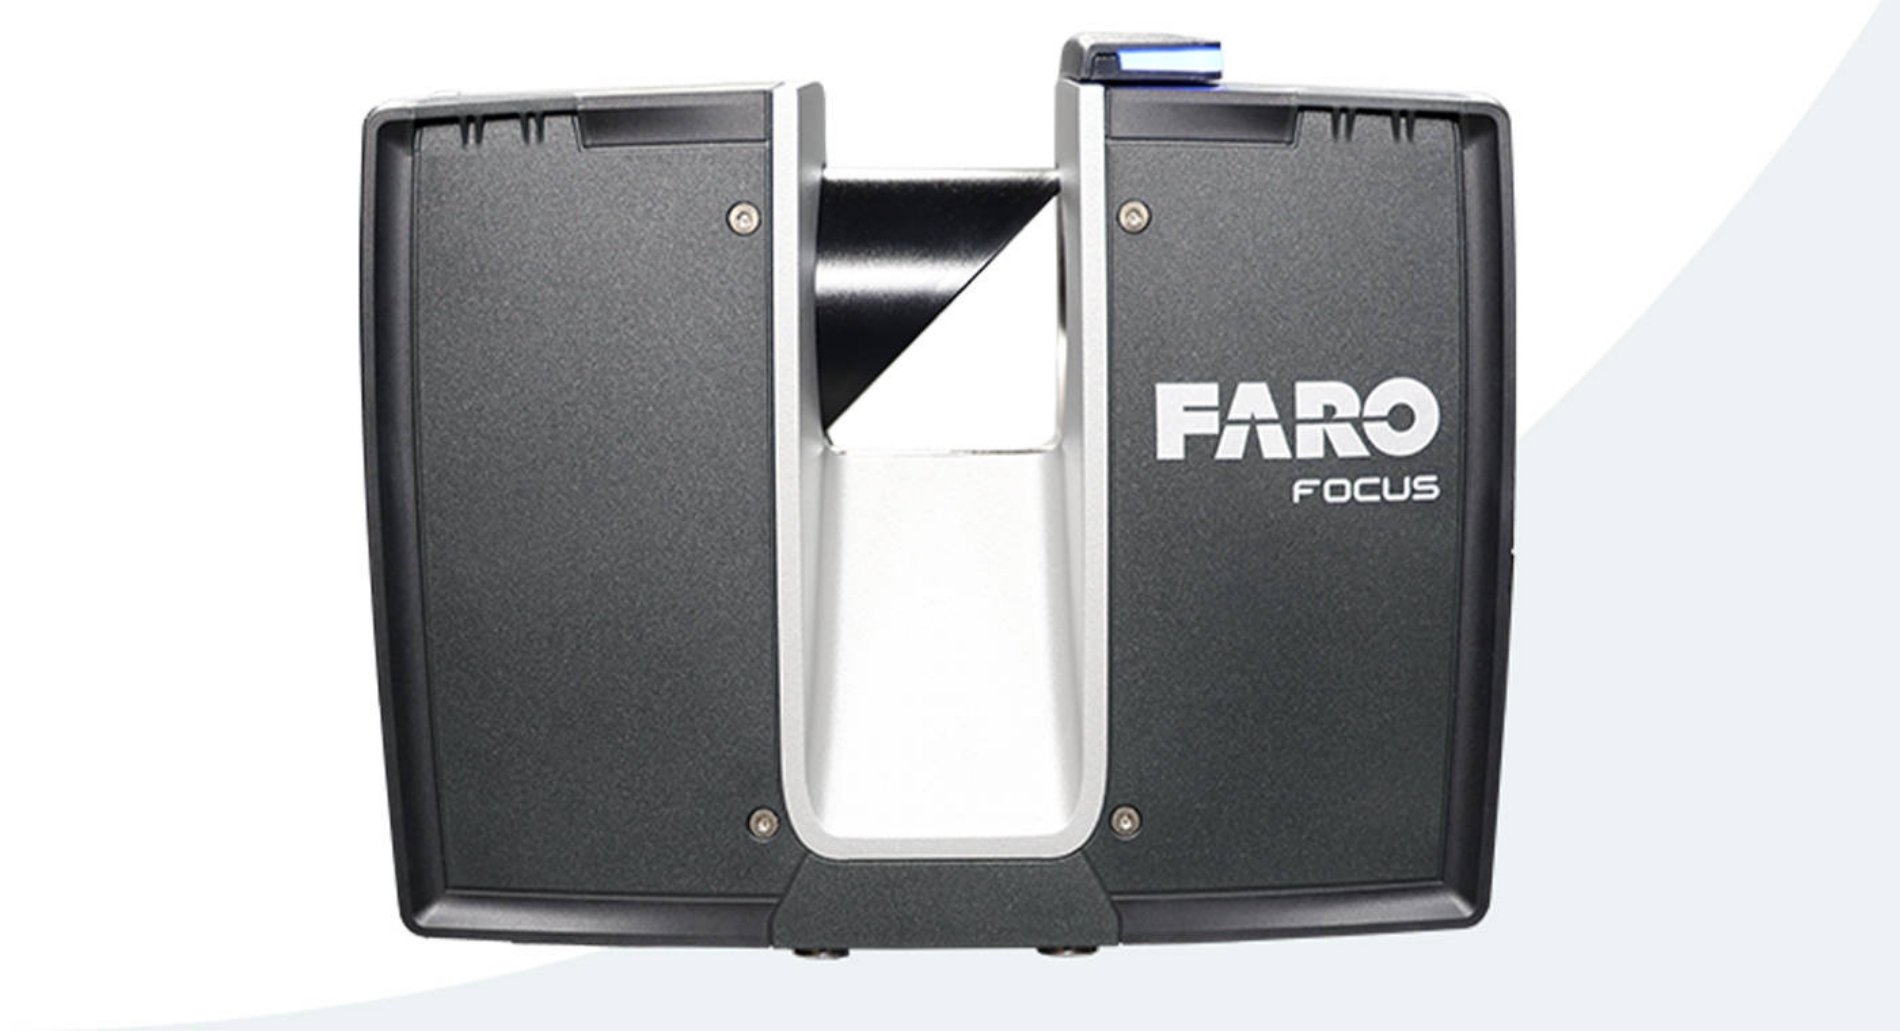 høj sennep Haiku FARO Focus Premium Laser Scanner | Sunbelt Sales